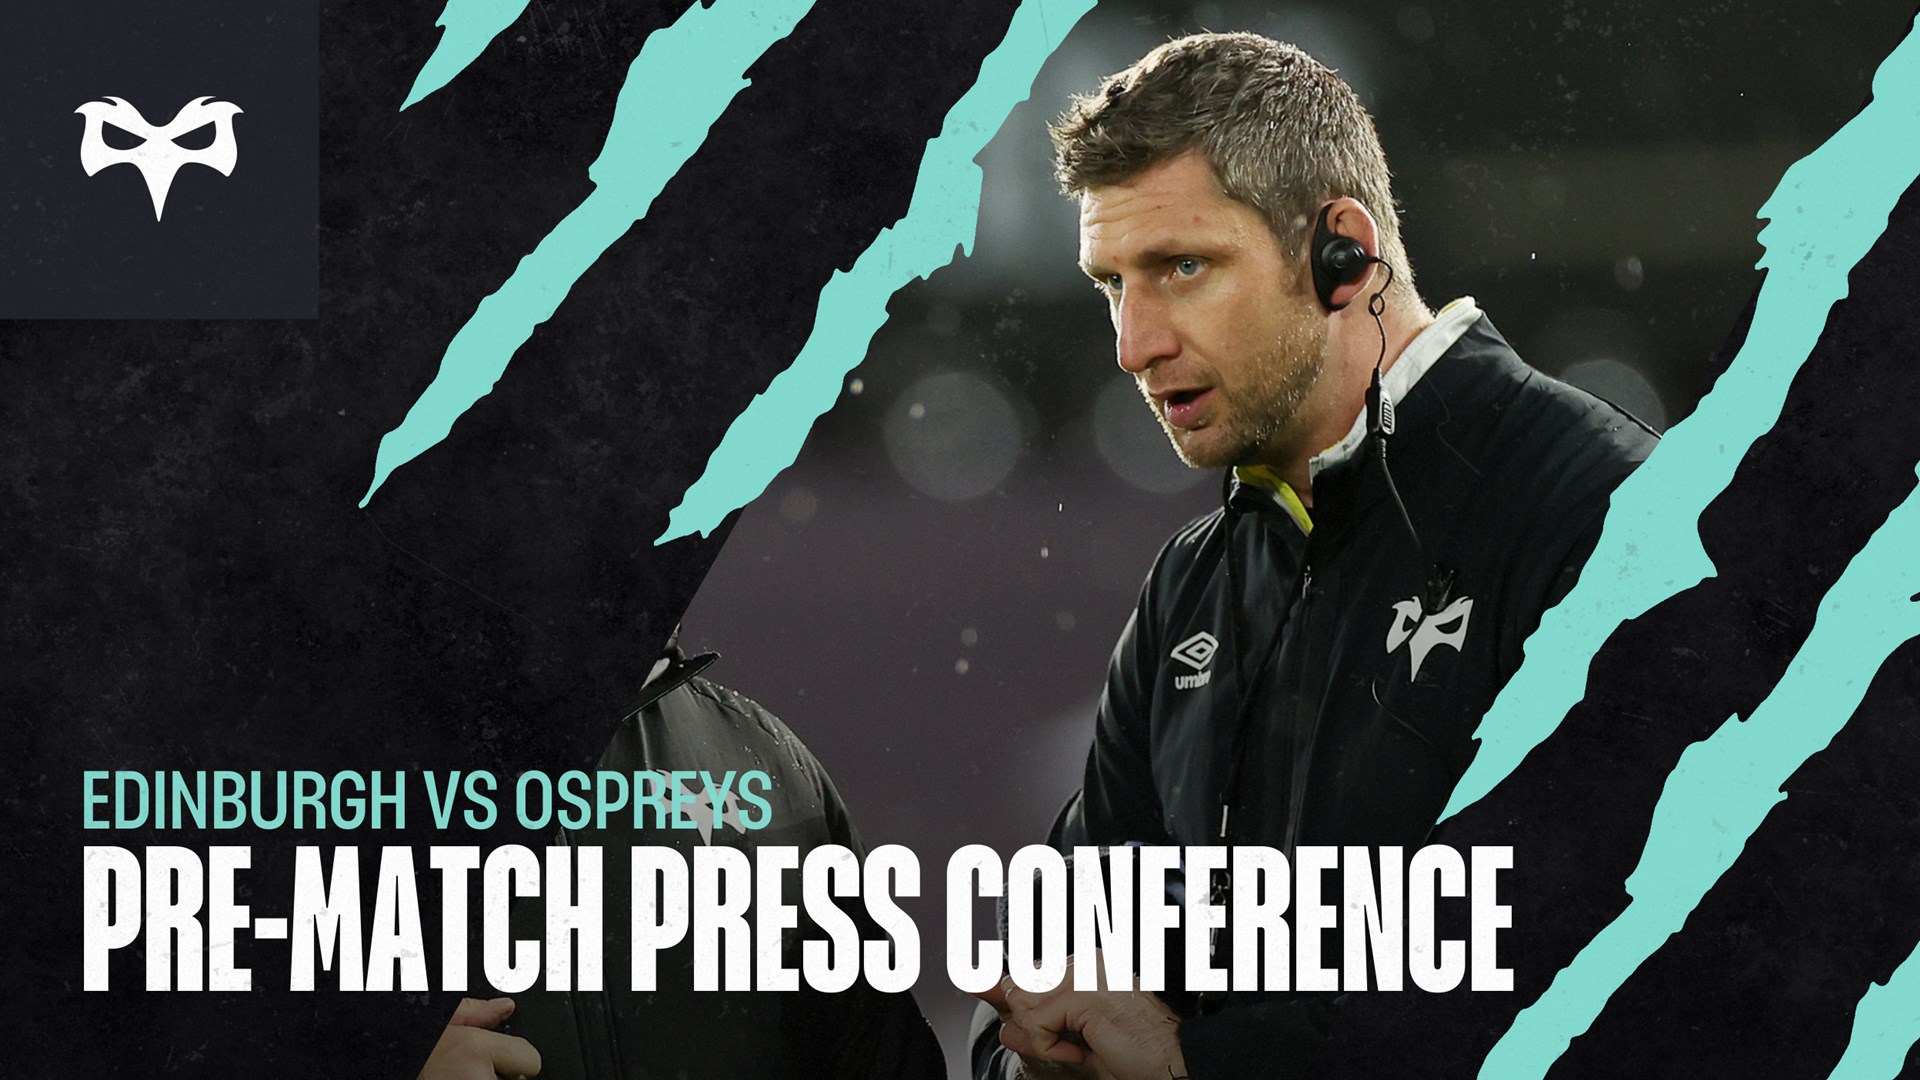 Pre-Match Press Conference: Richard Kelly (vs Edinburgh)